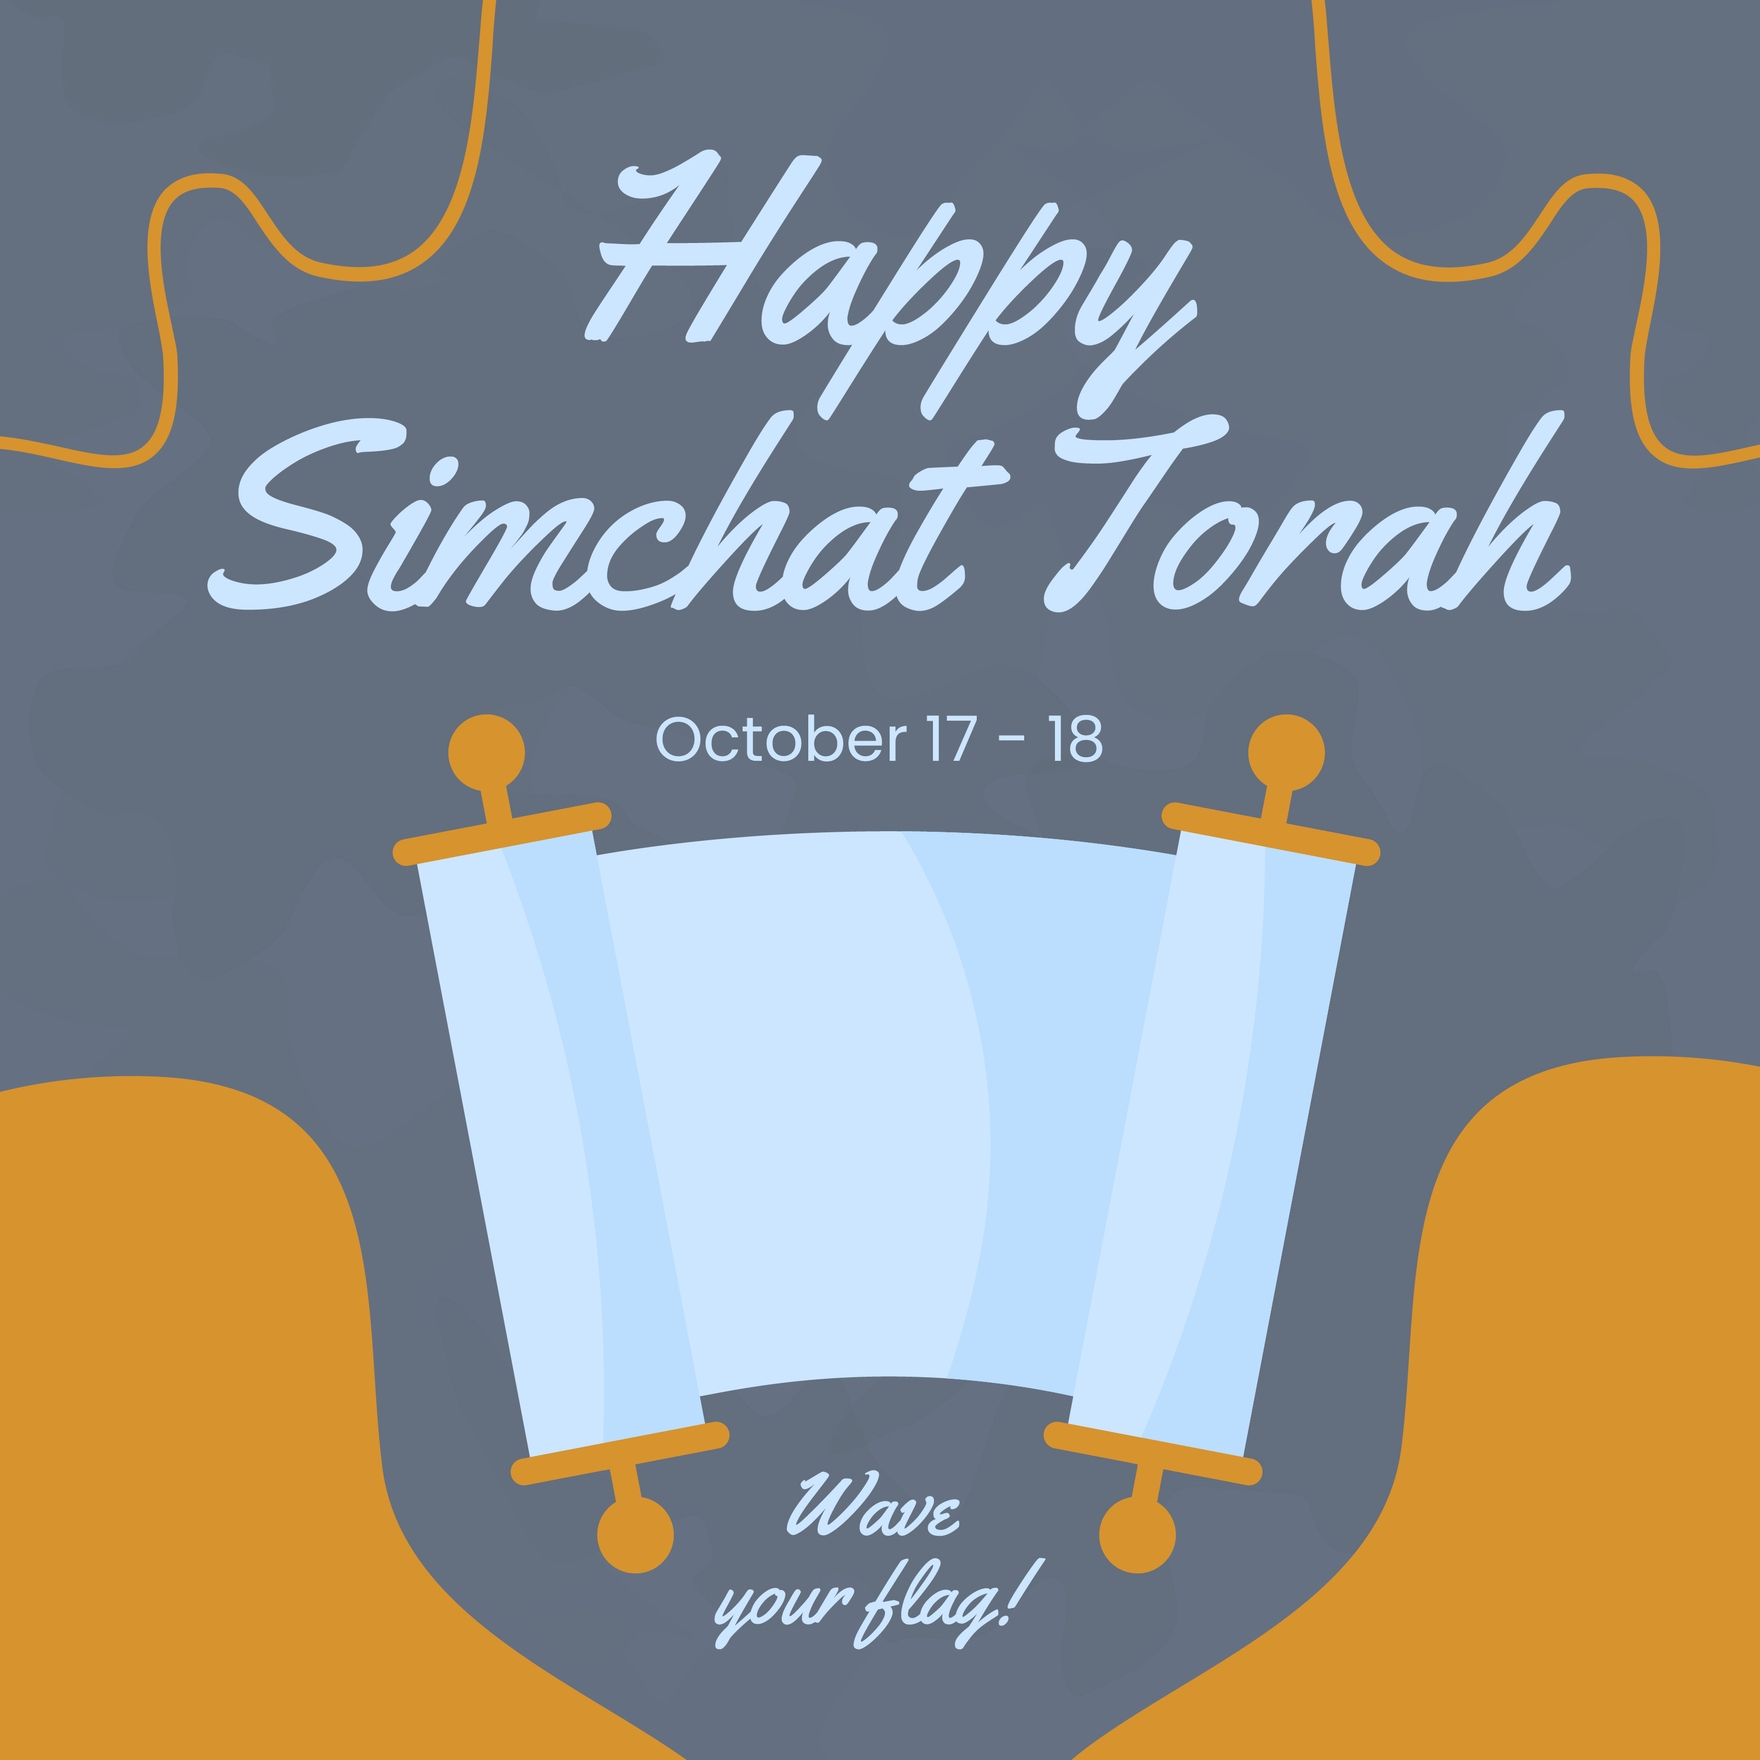 Free Simchat Torah Instagram Post in Illustrator, PSD, EPS, SVG, JPG, PNG